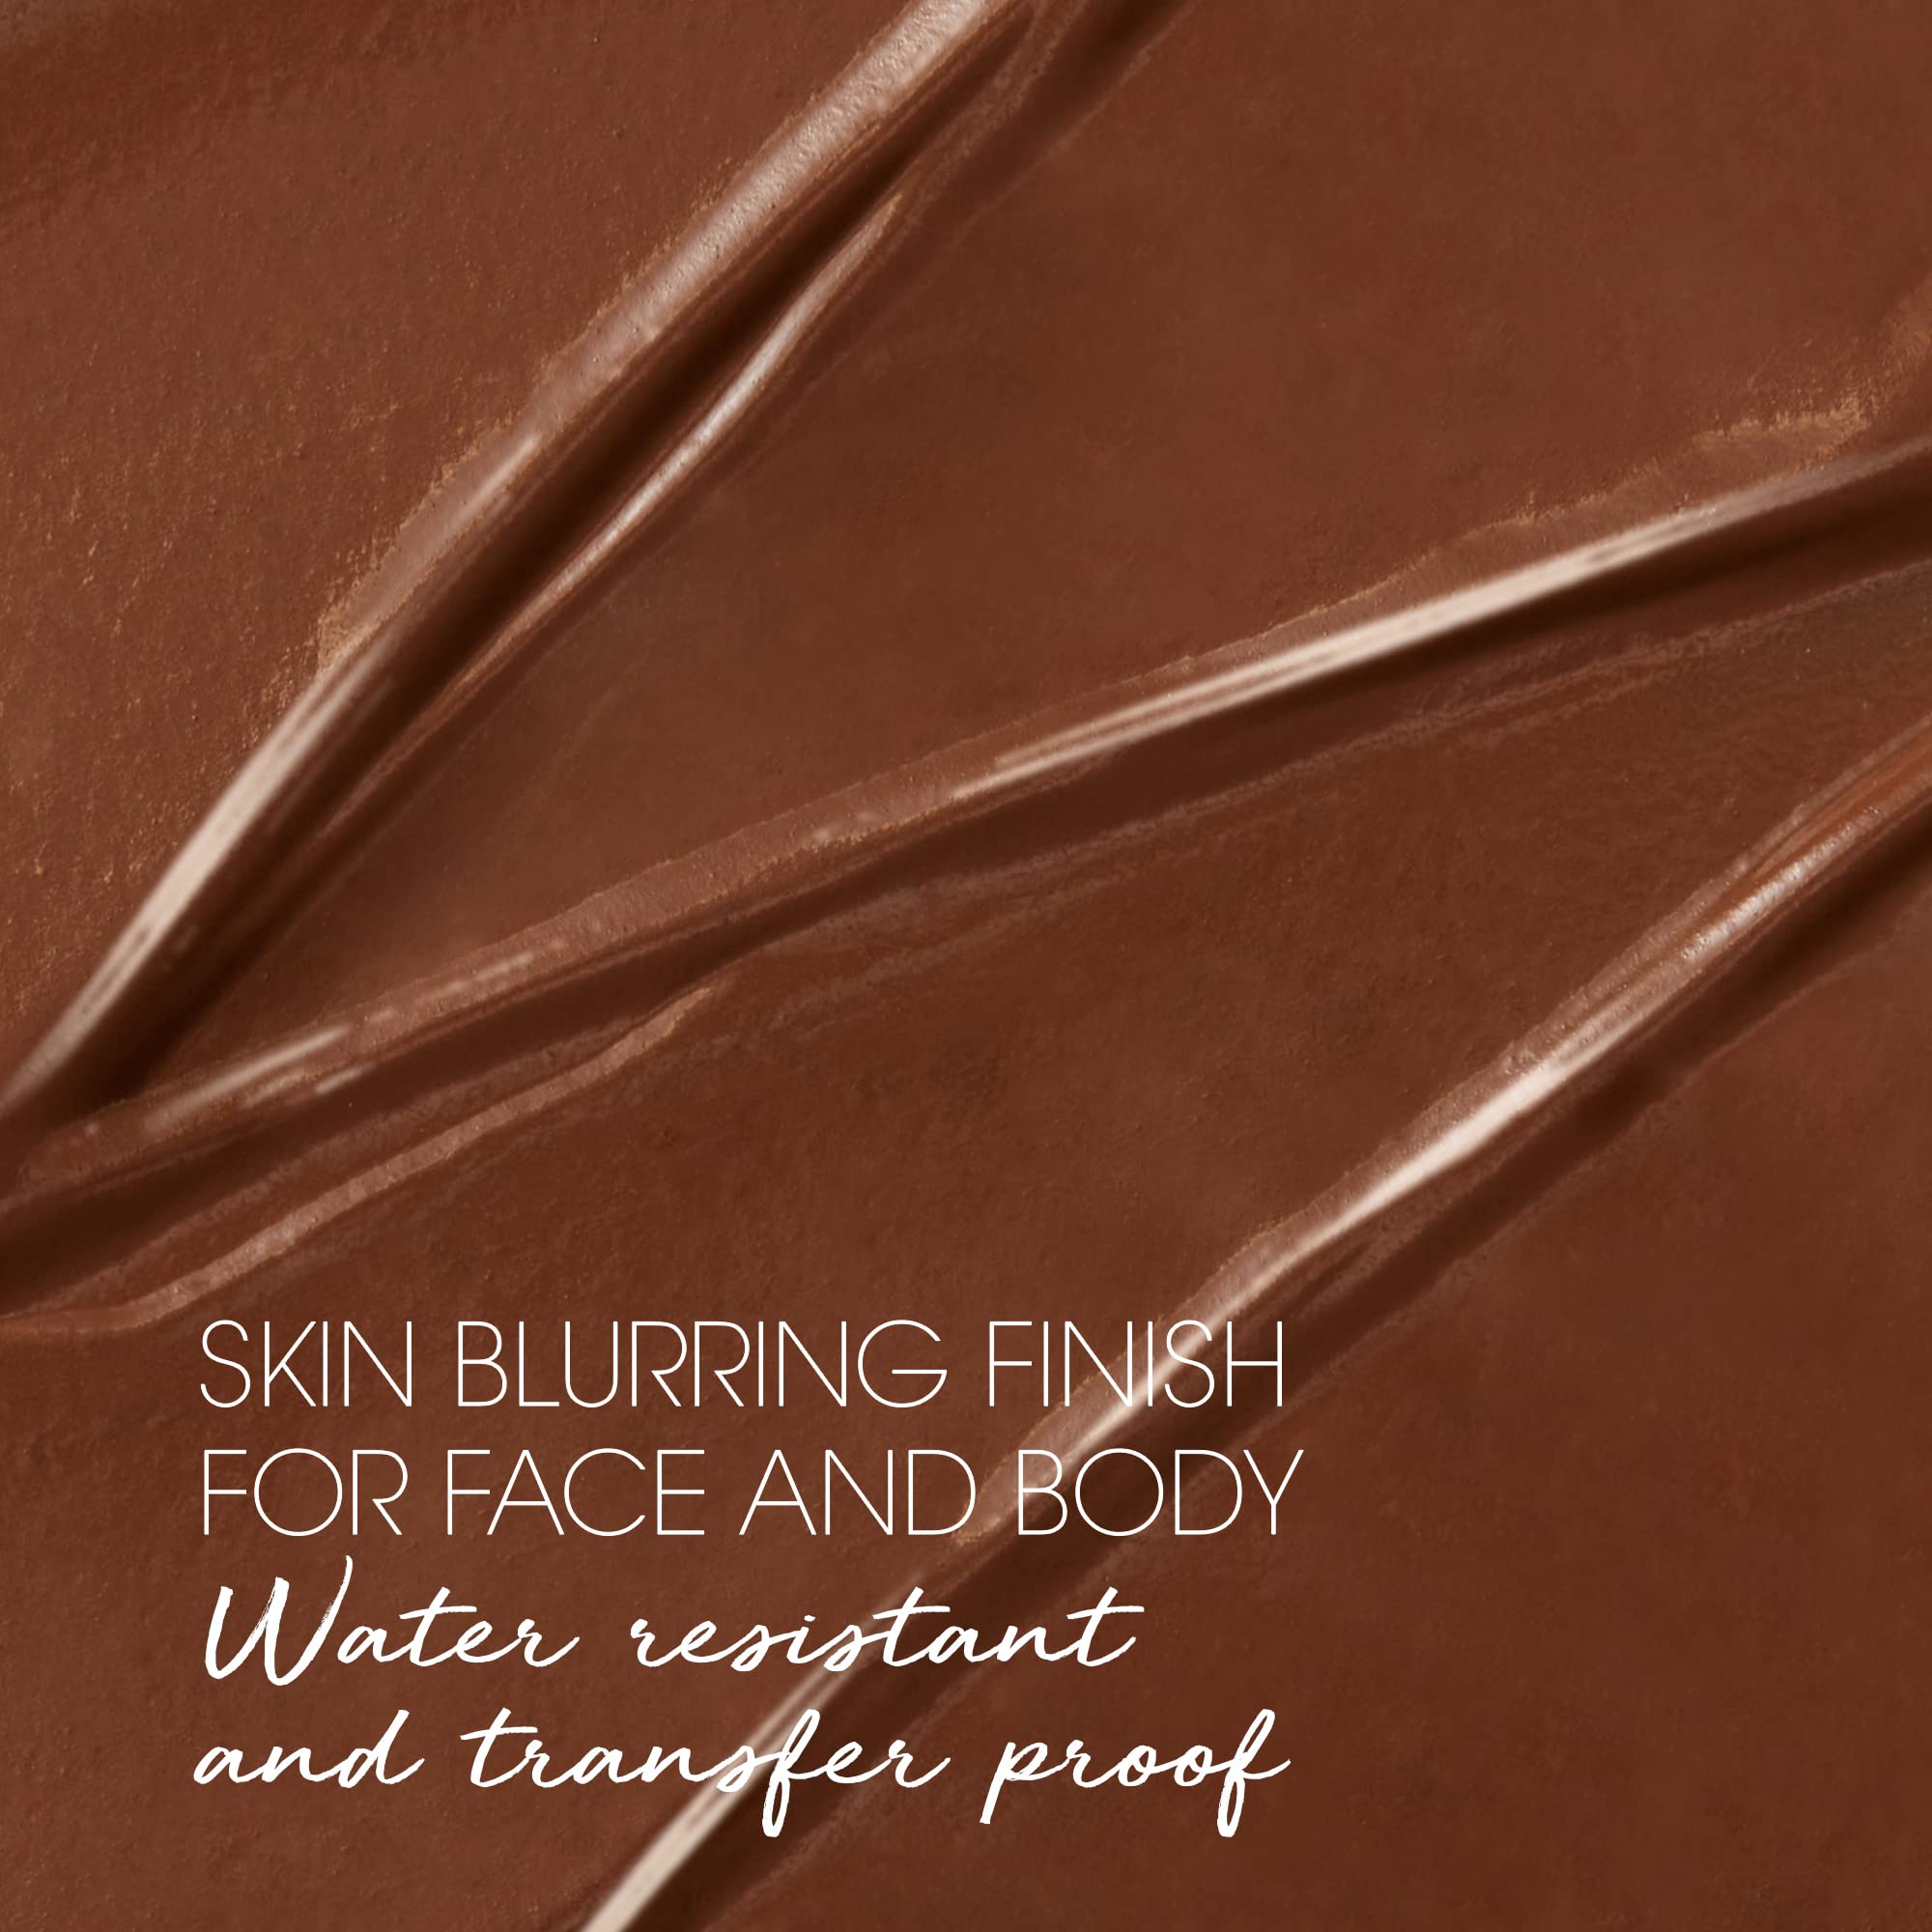 St. Tropez Instant Glow Face & Body Bronzer Makeup 100ml, 3.38 fl. oz.